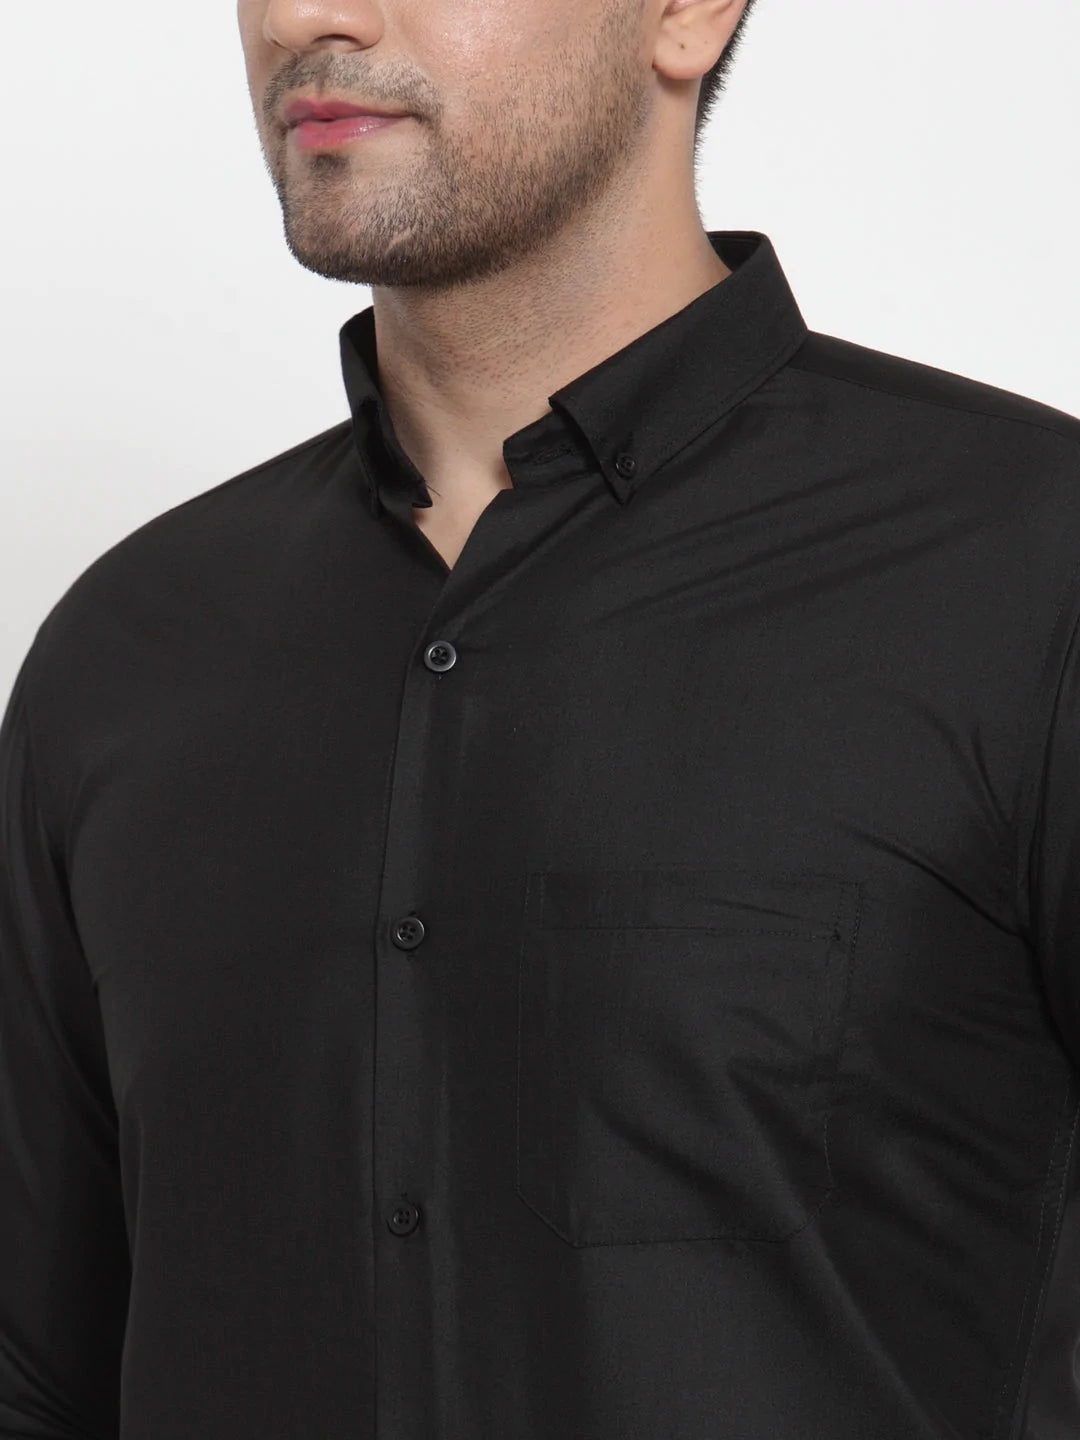 Jainish Black Men's Cotton Solid Button Down Formal Shirts ( SF 713Black )